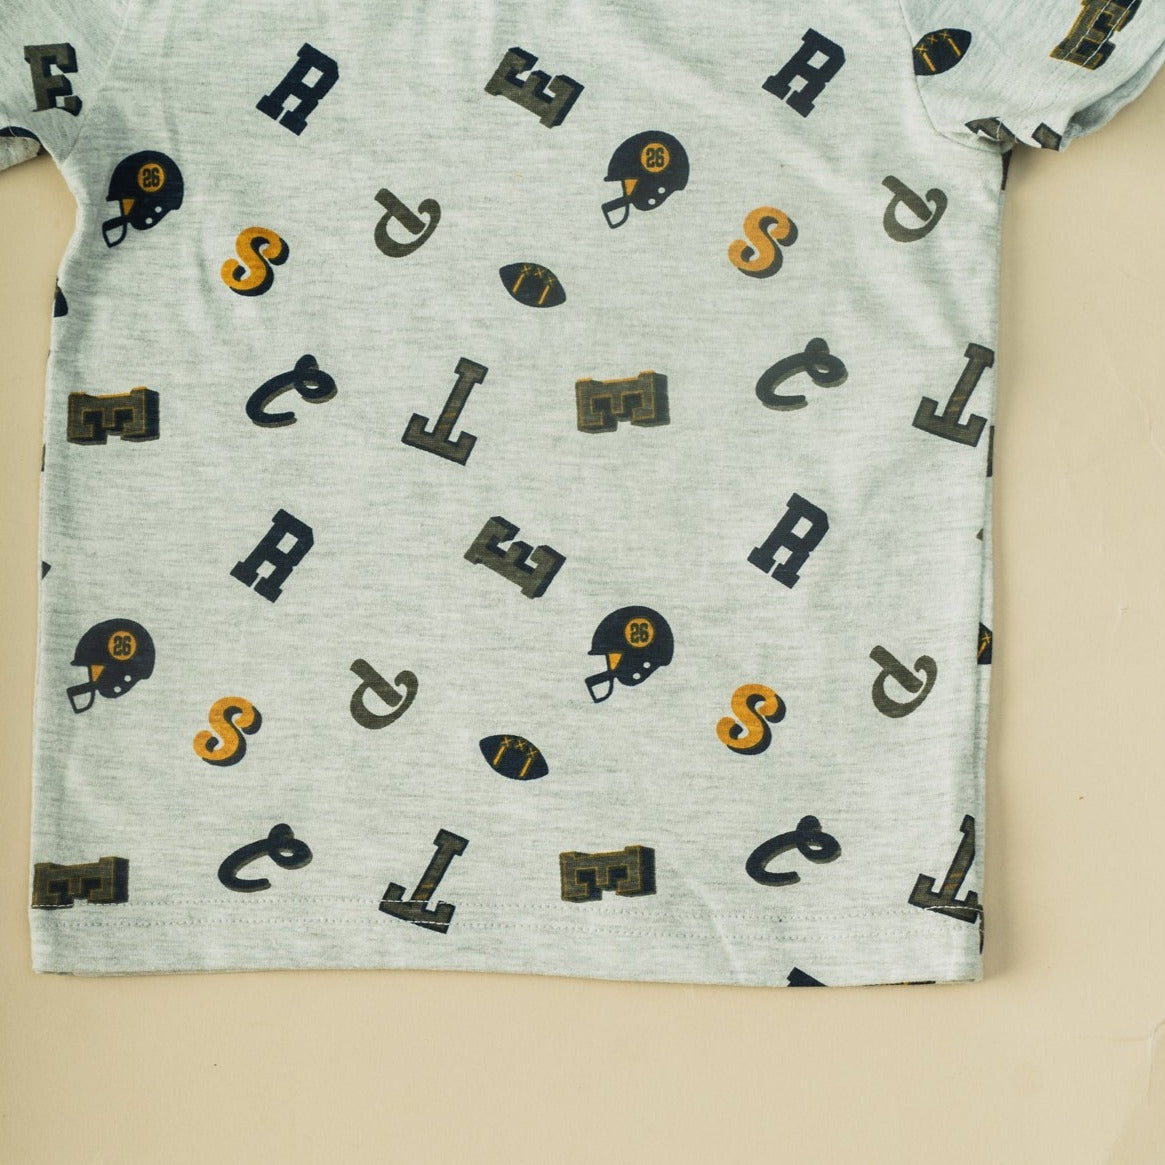 Baby Alphabet Print Short Sleeve T-Shirt